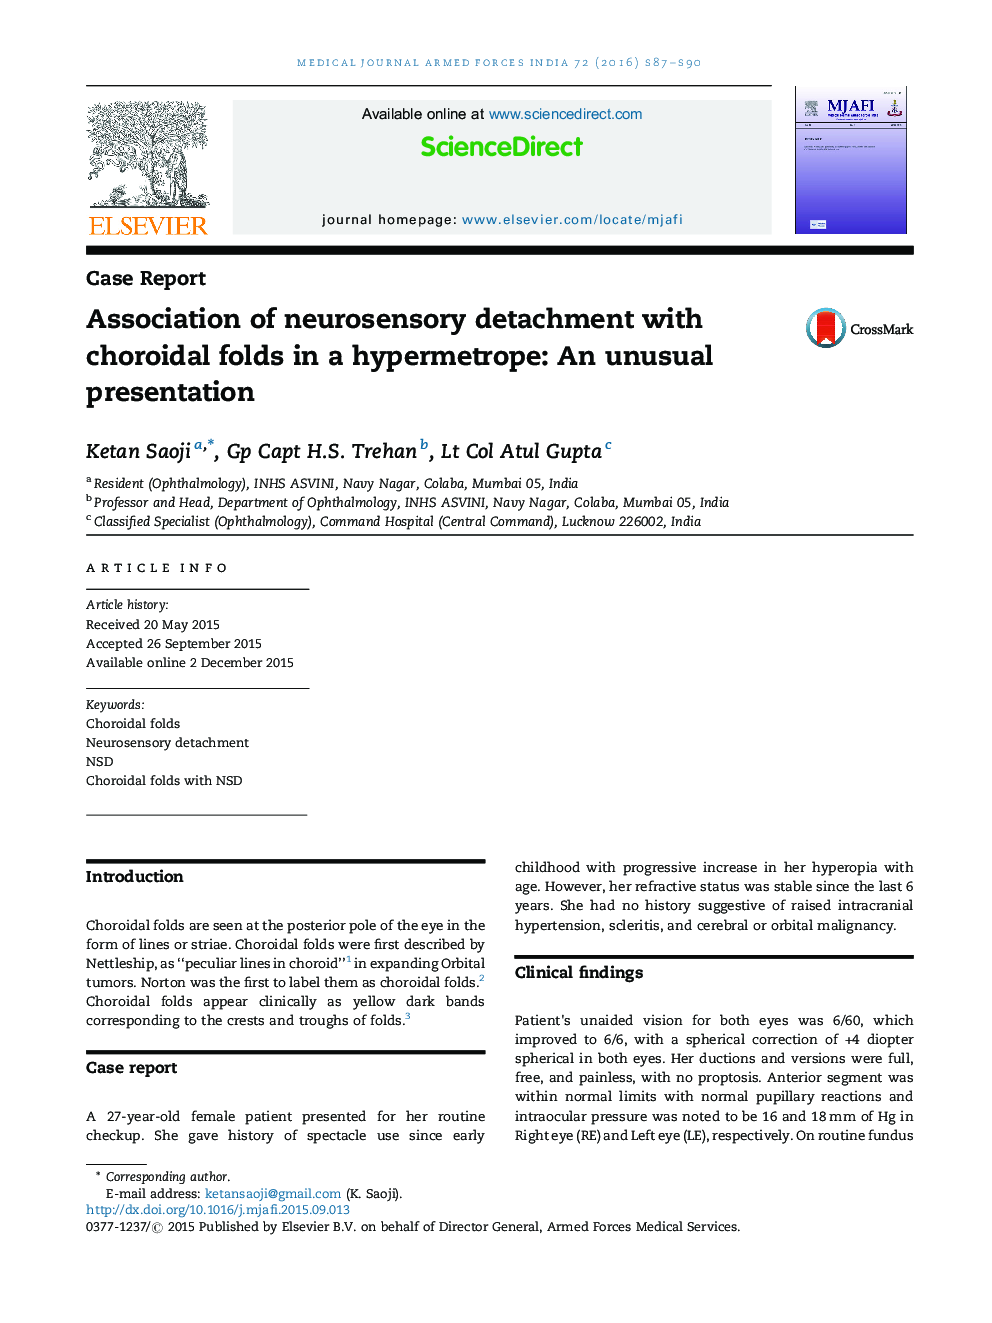 Association of neurosensory detachment with choroidal folds in a hypermetrope: An unusual presentation